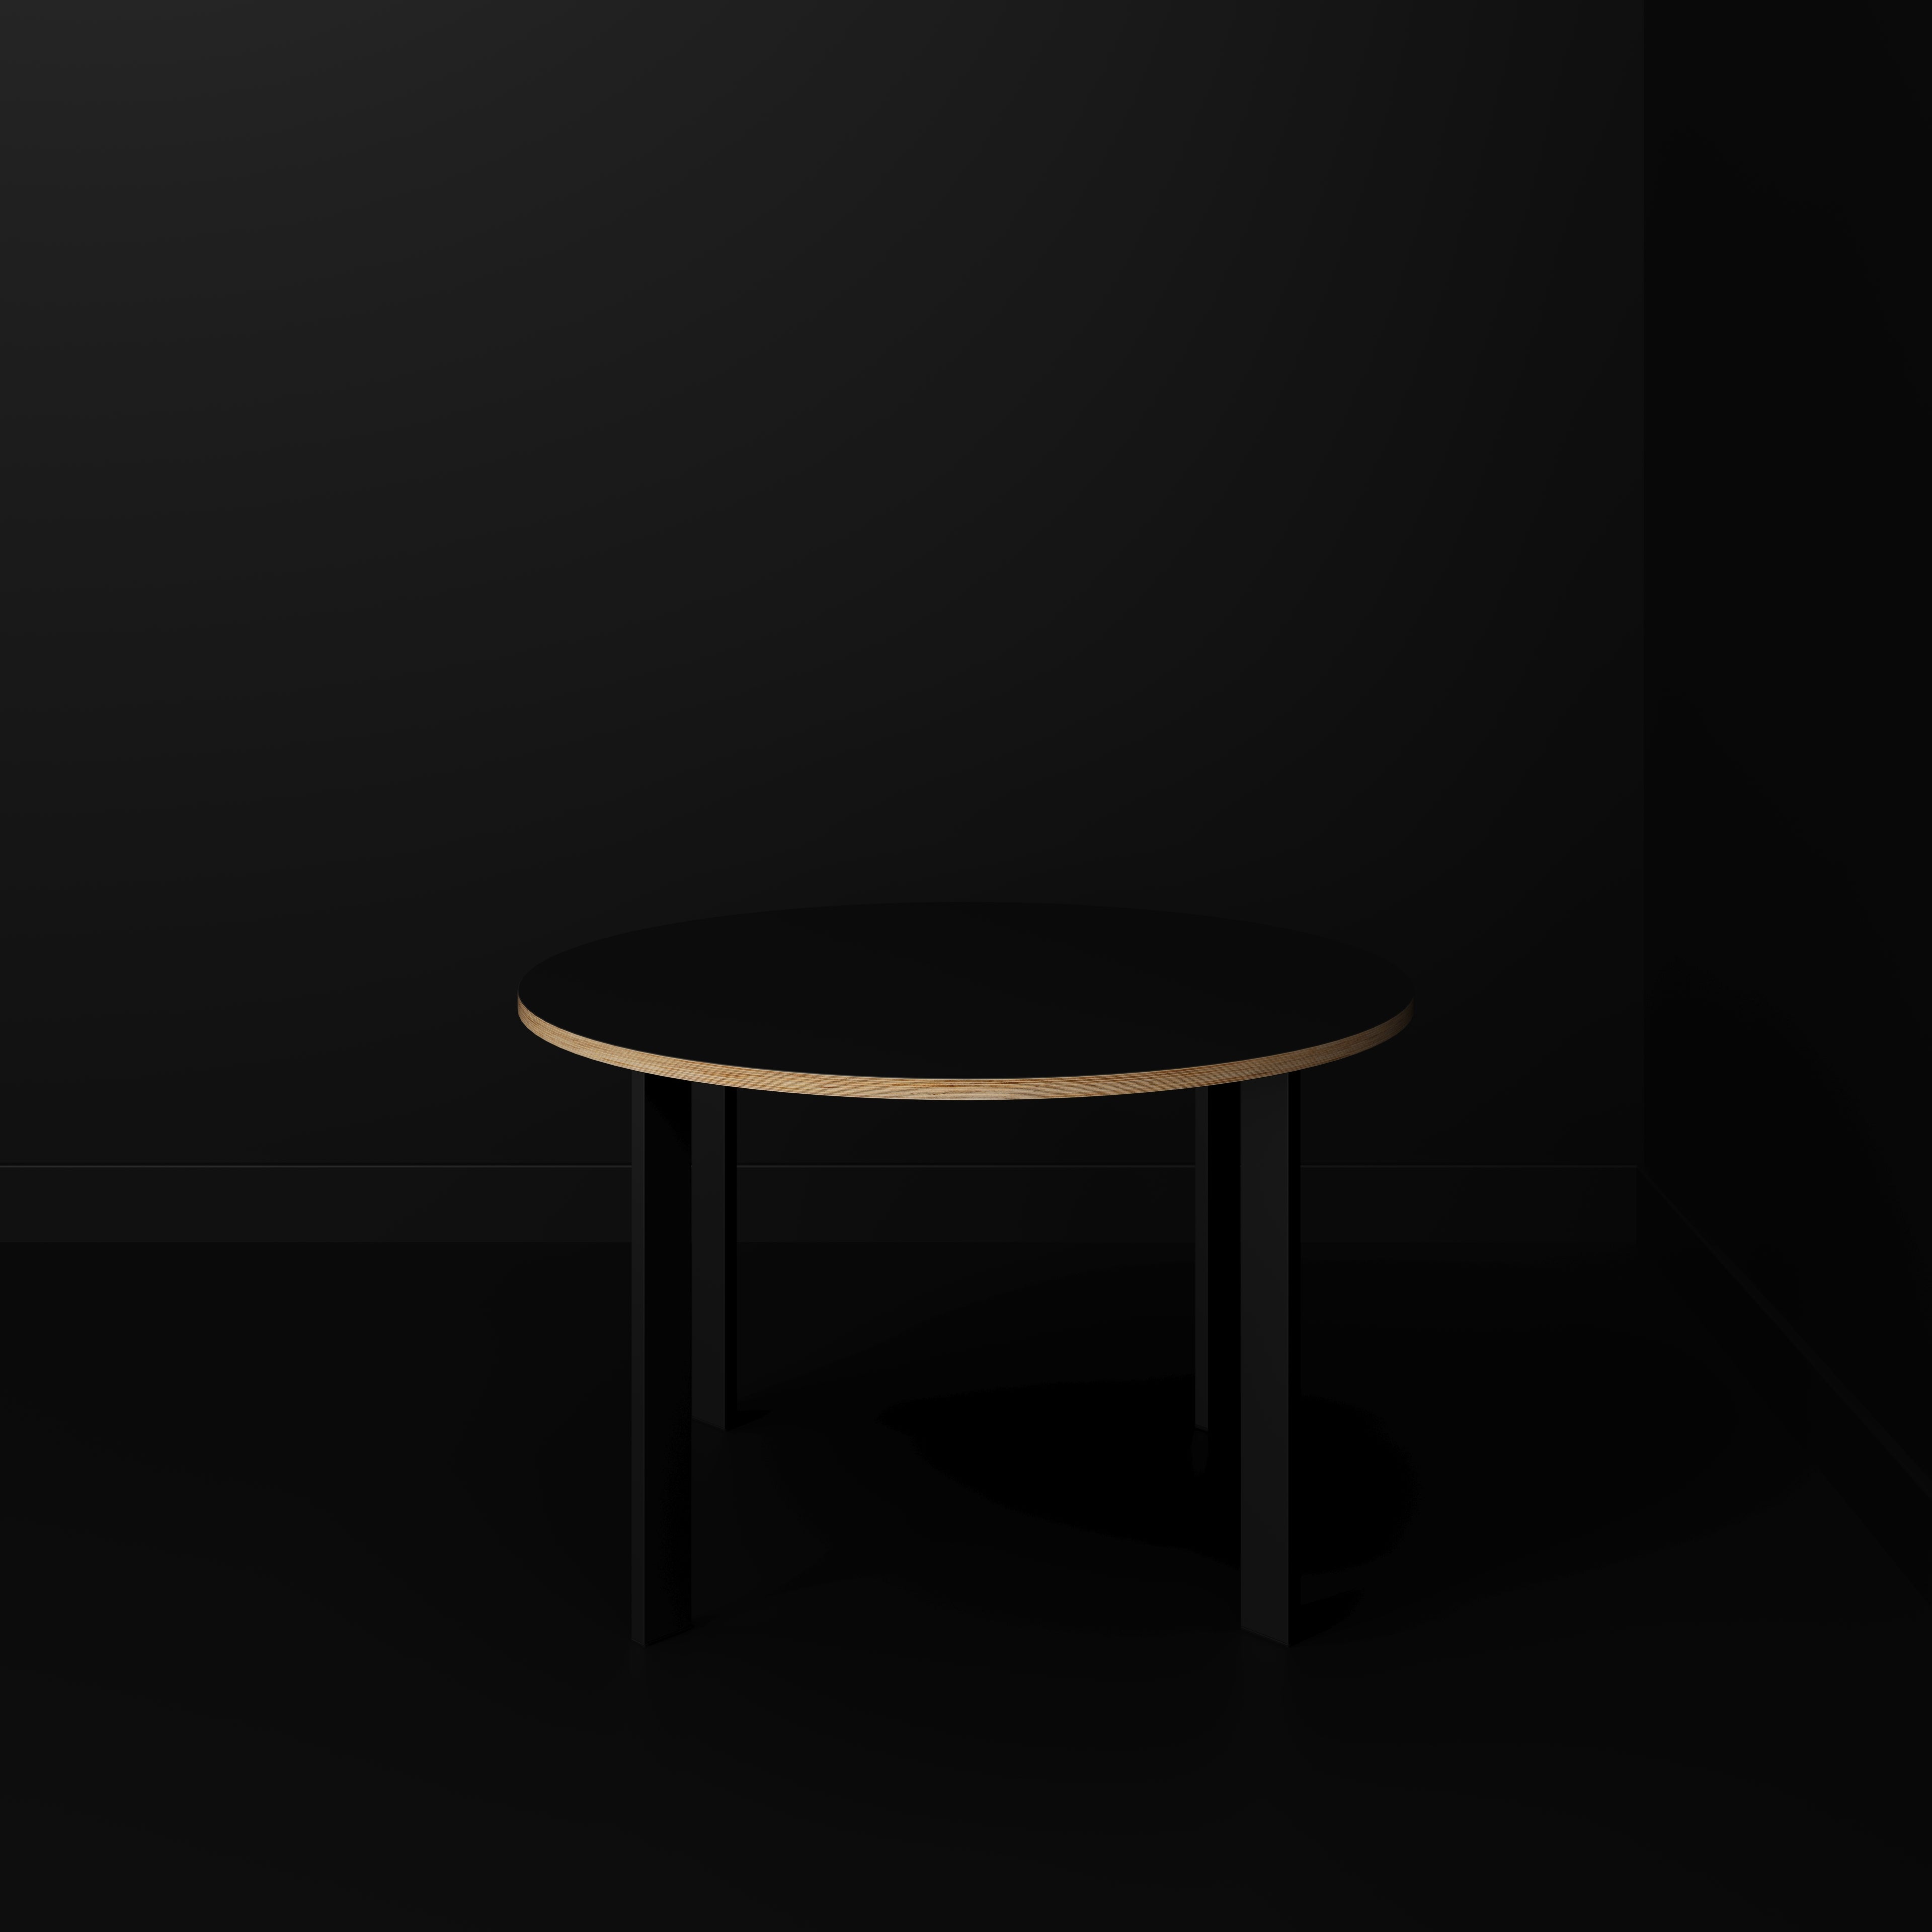 Round Table with Black Rectangular Single Pin Legs - Formica Diamond Black - 1200(dia) x 735(h)